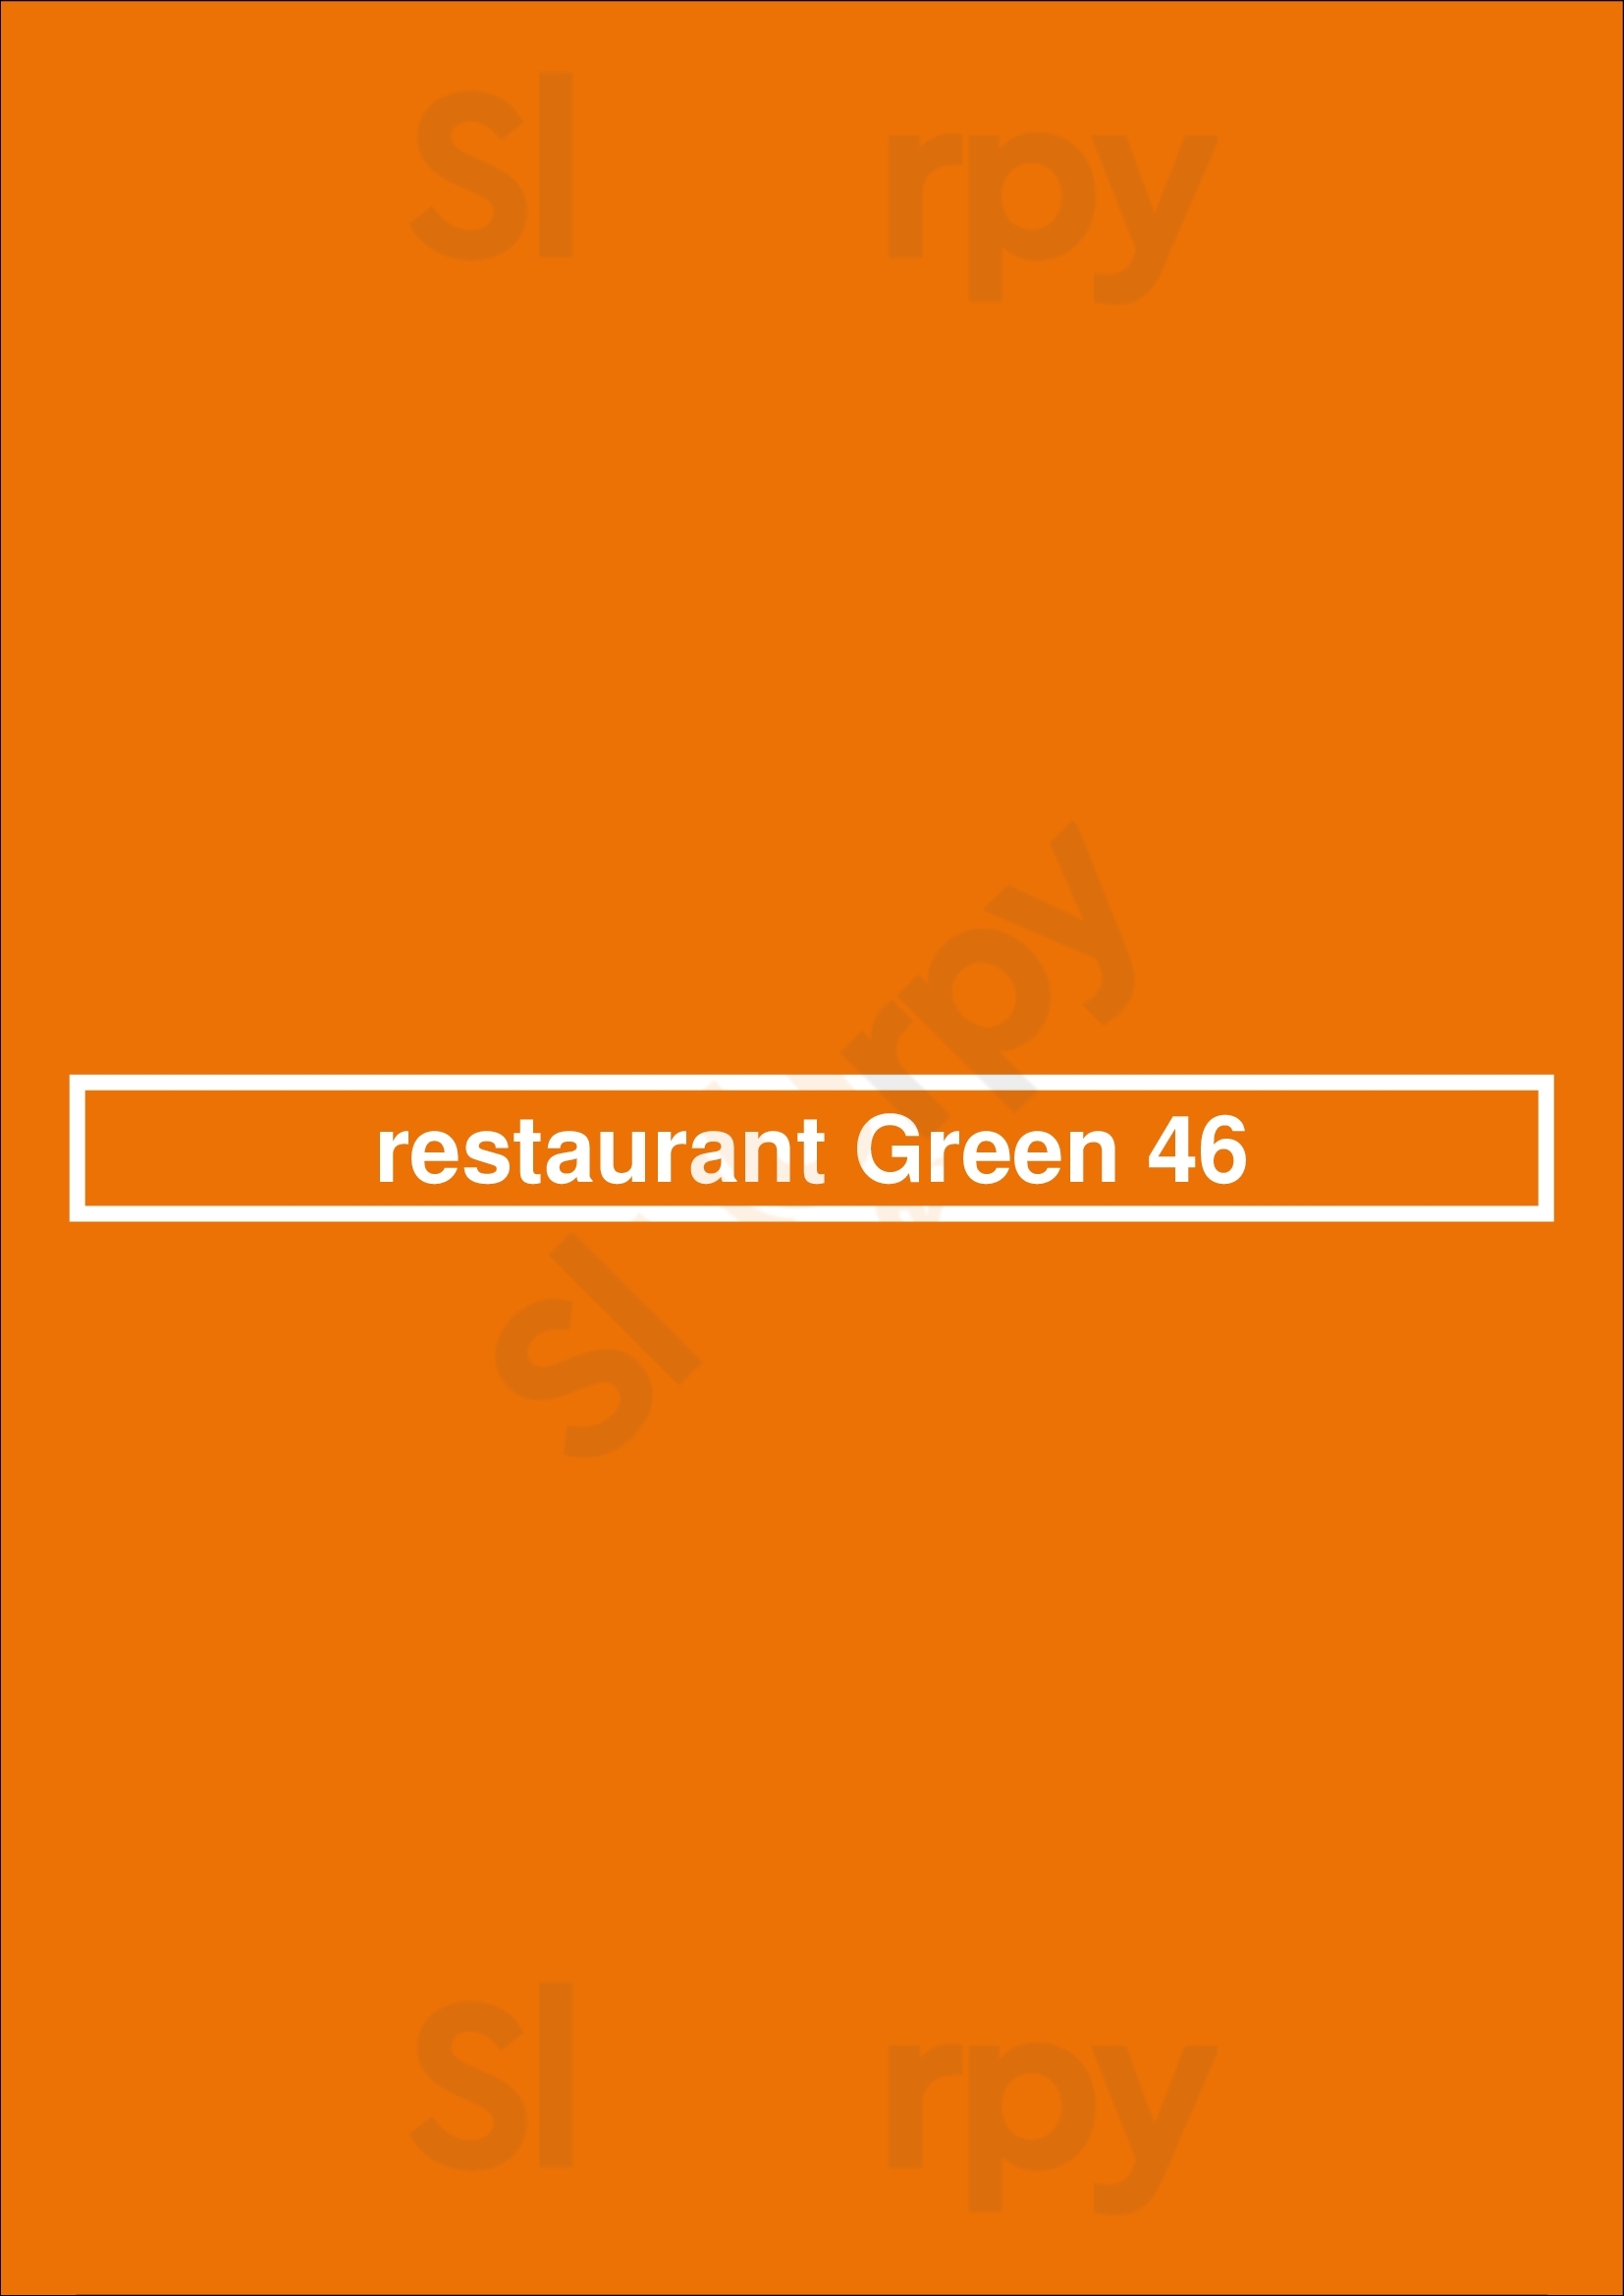 Restaurant Green 46 Groesbeek Menu - 1